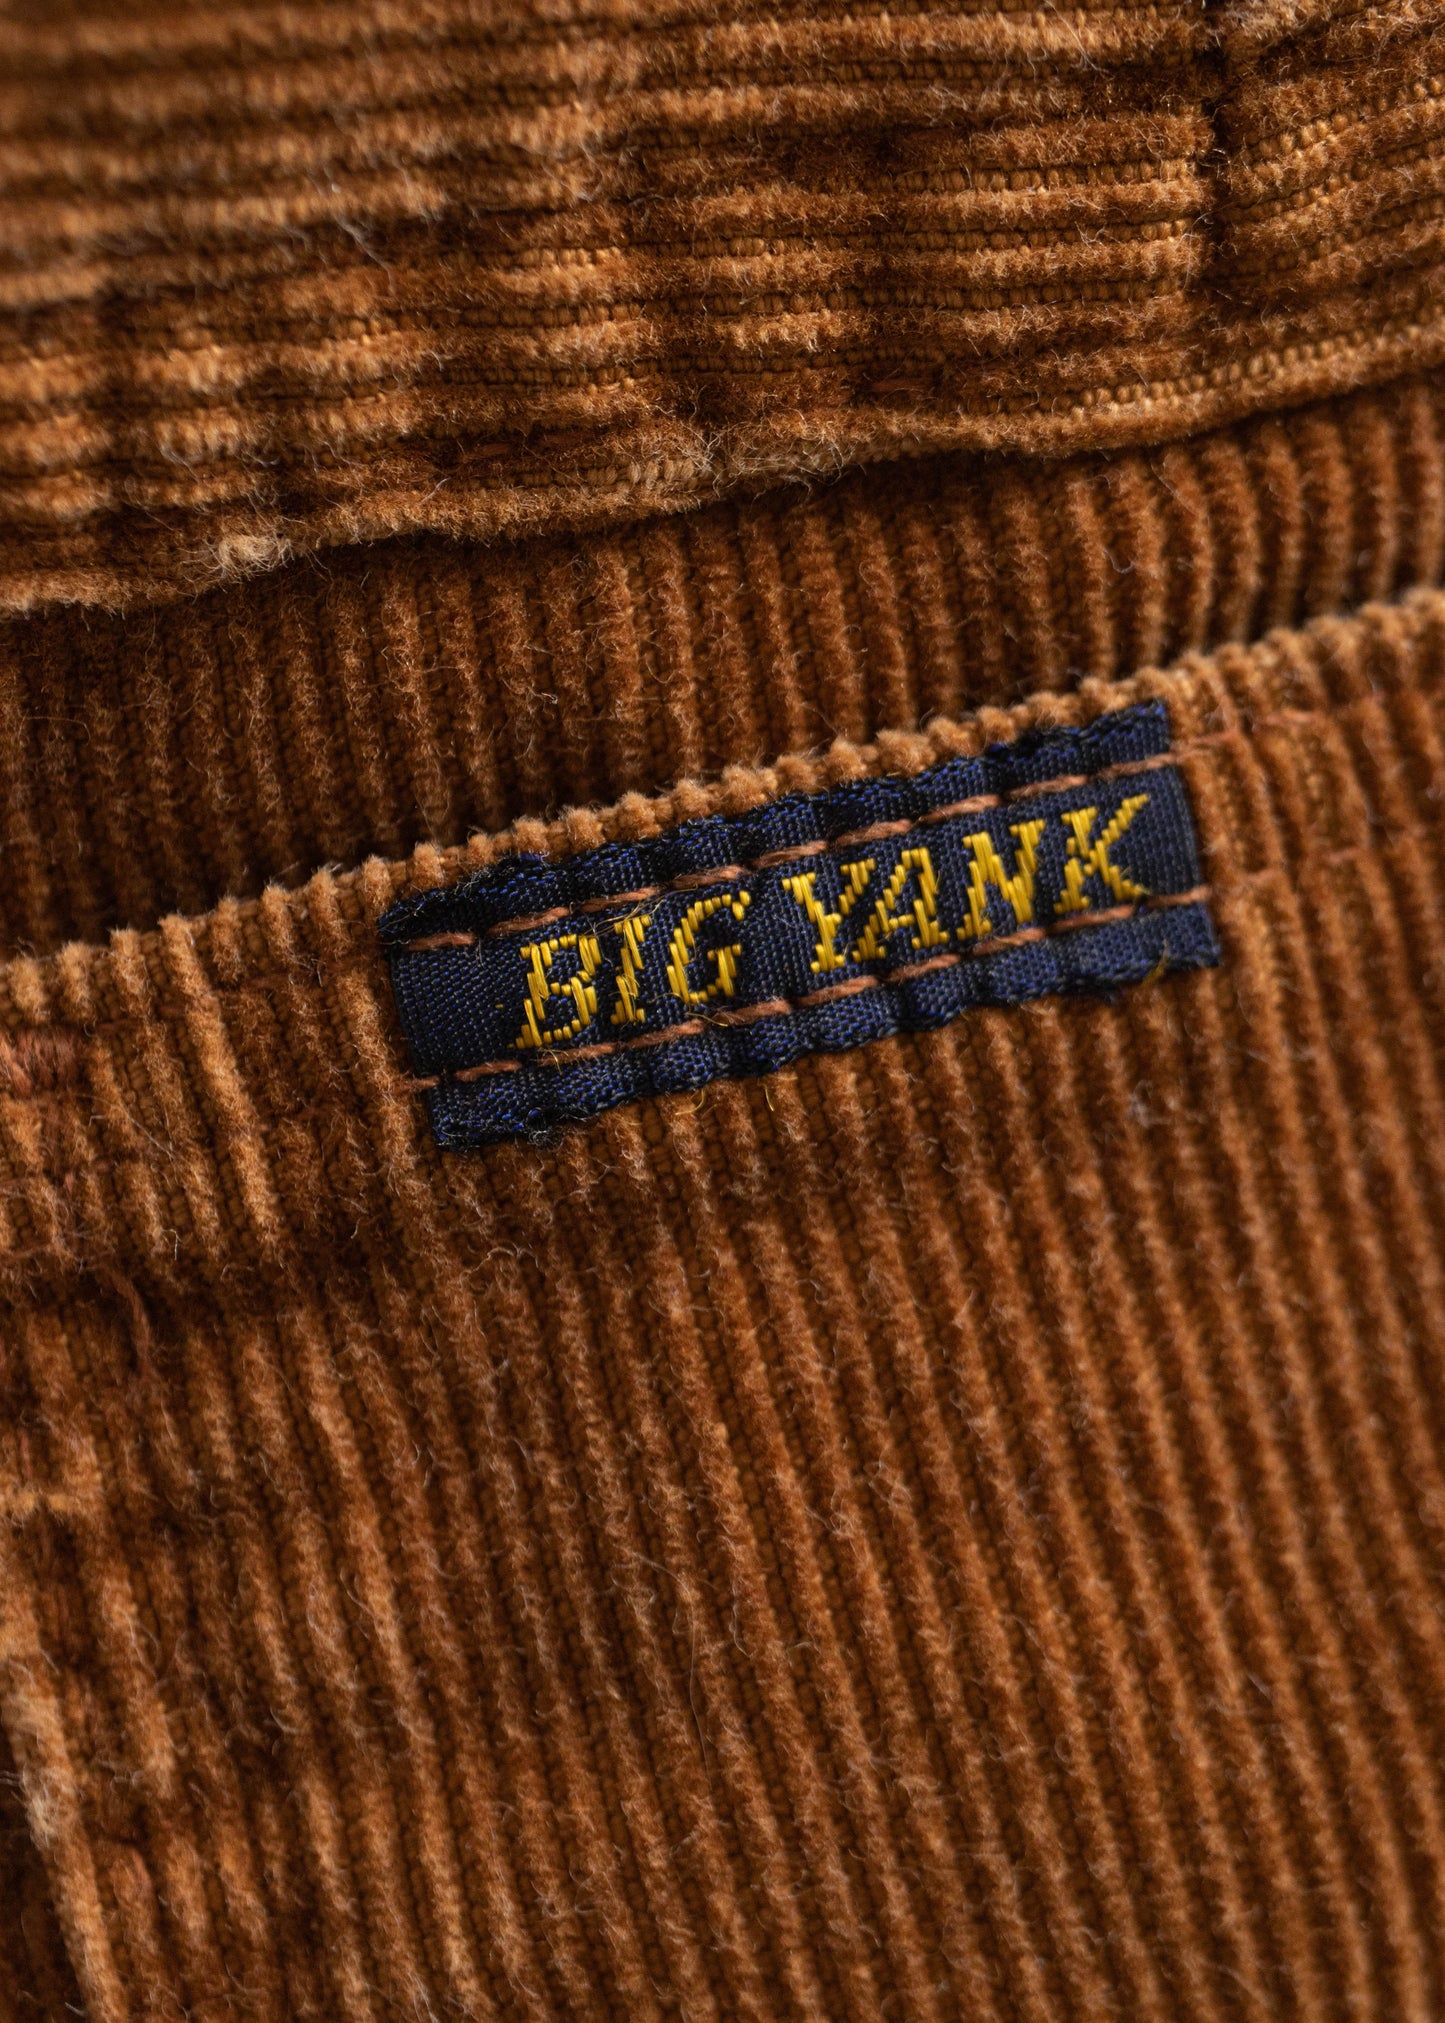 Vintage Big Yank Flare Corduroy Pants Size Women's 27 Men's 30